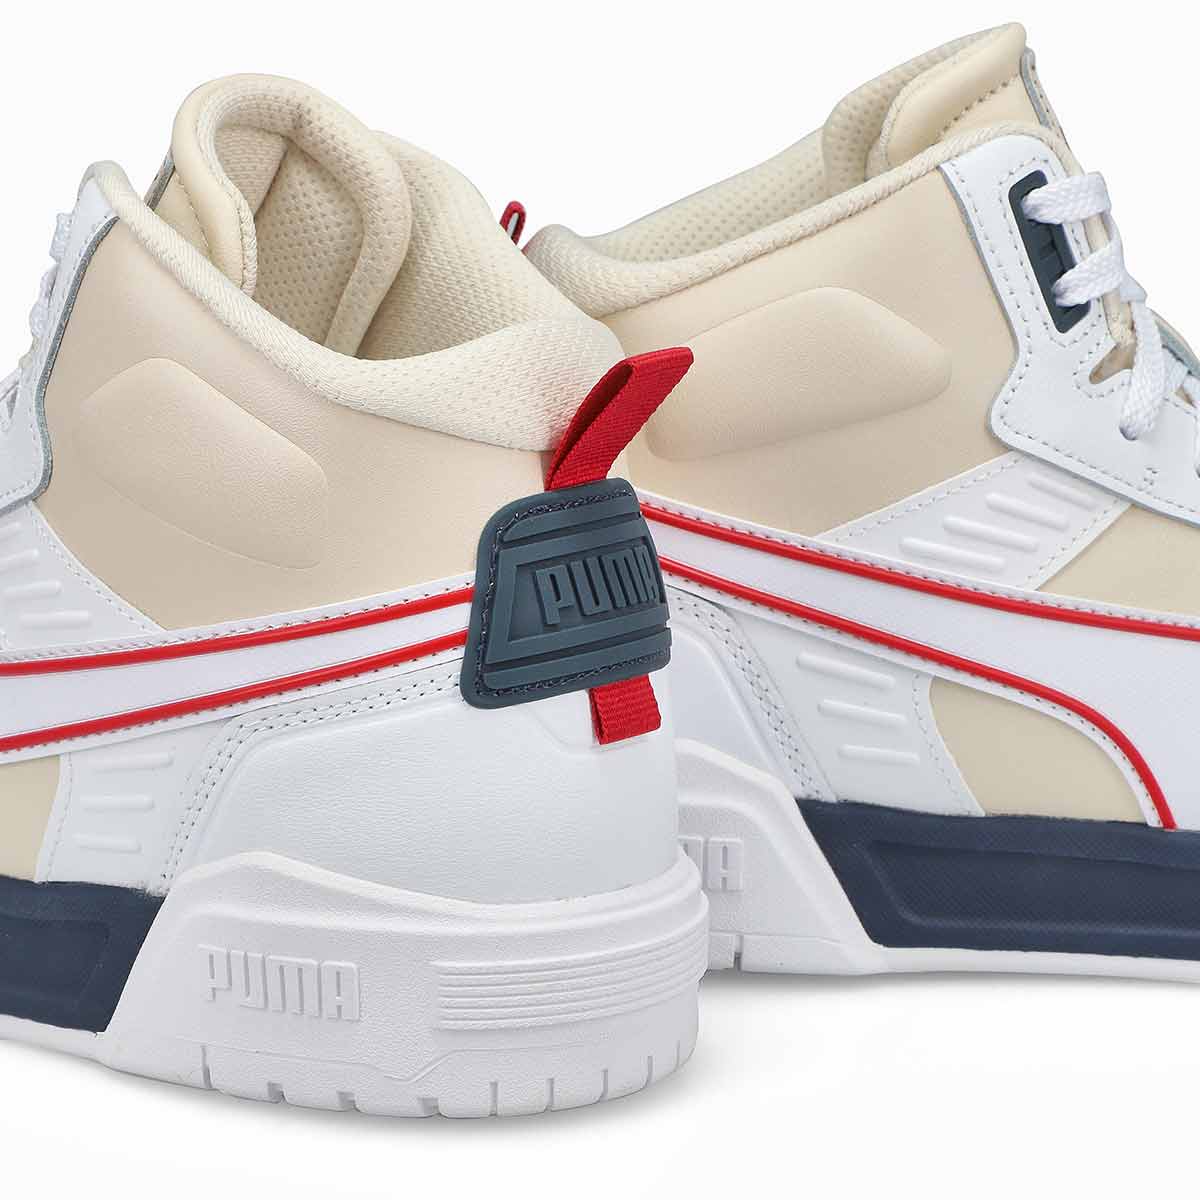 Men's RBD Tech Hi Top Sneaker - White/Navy/Red